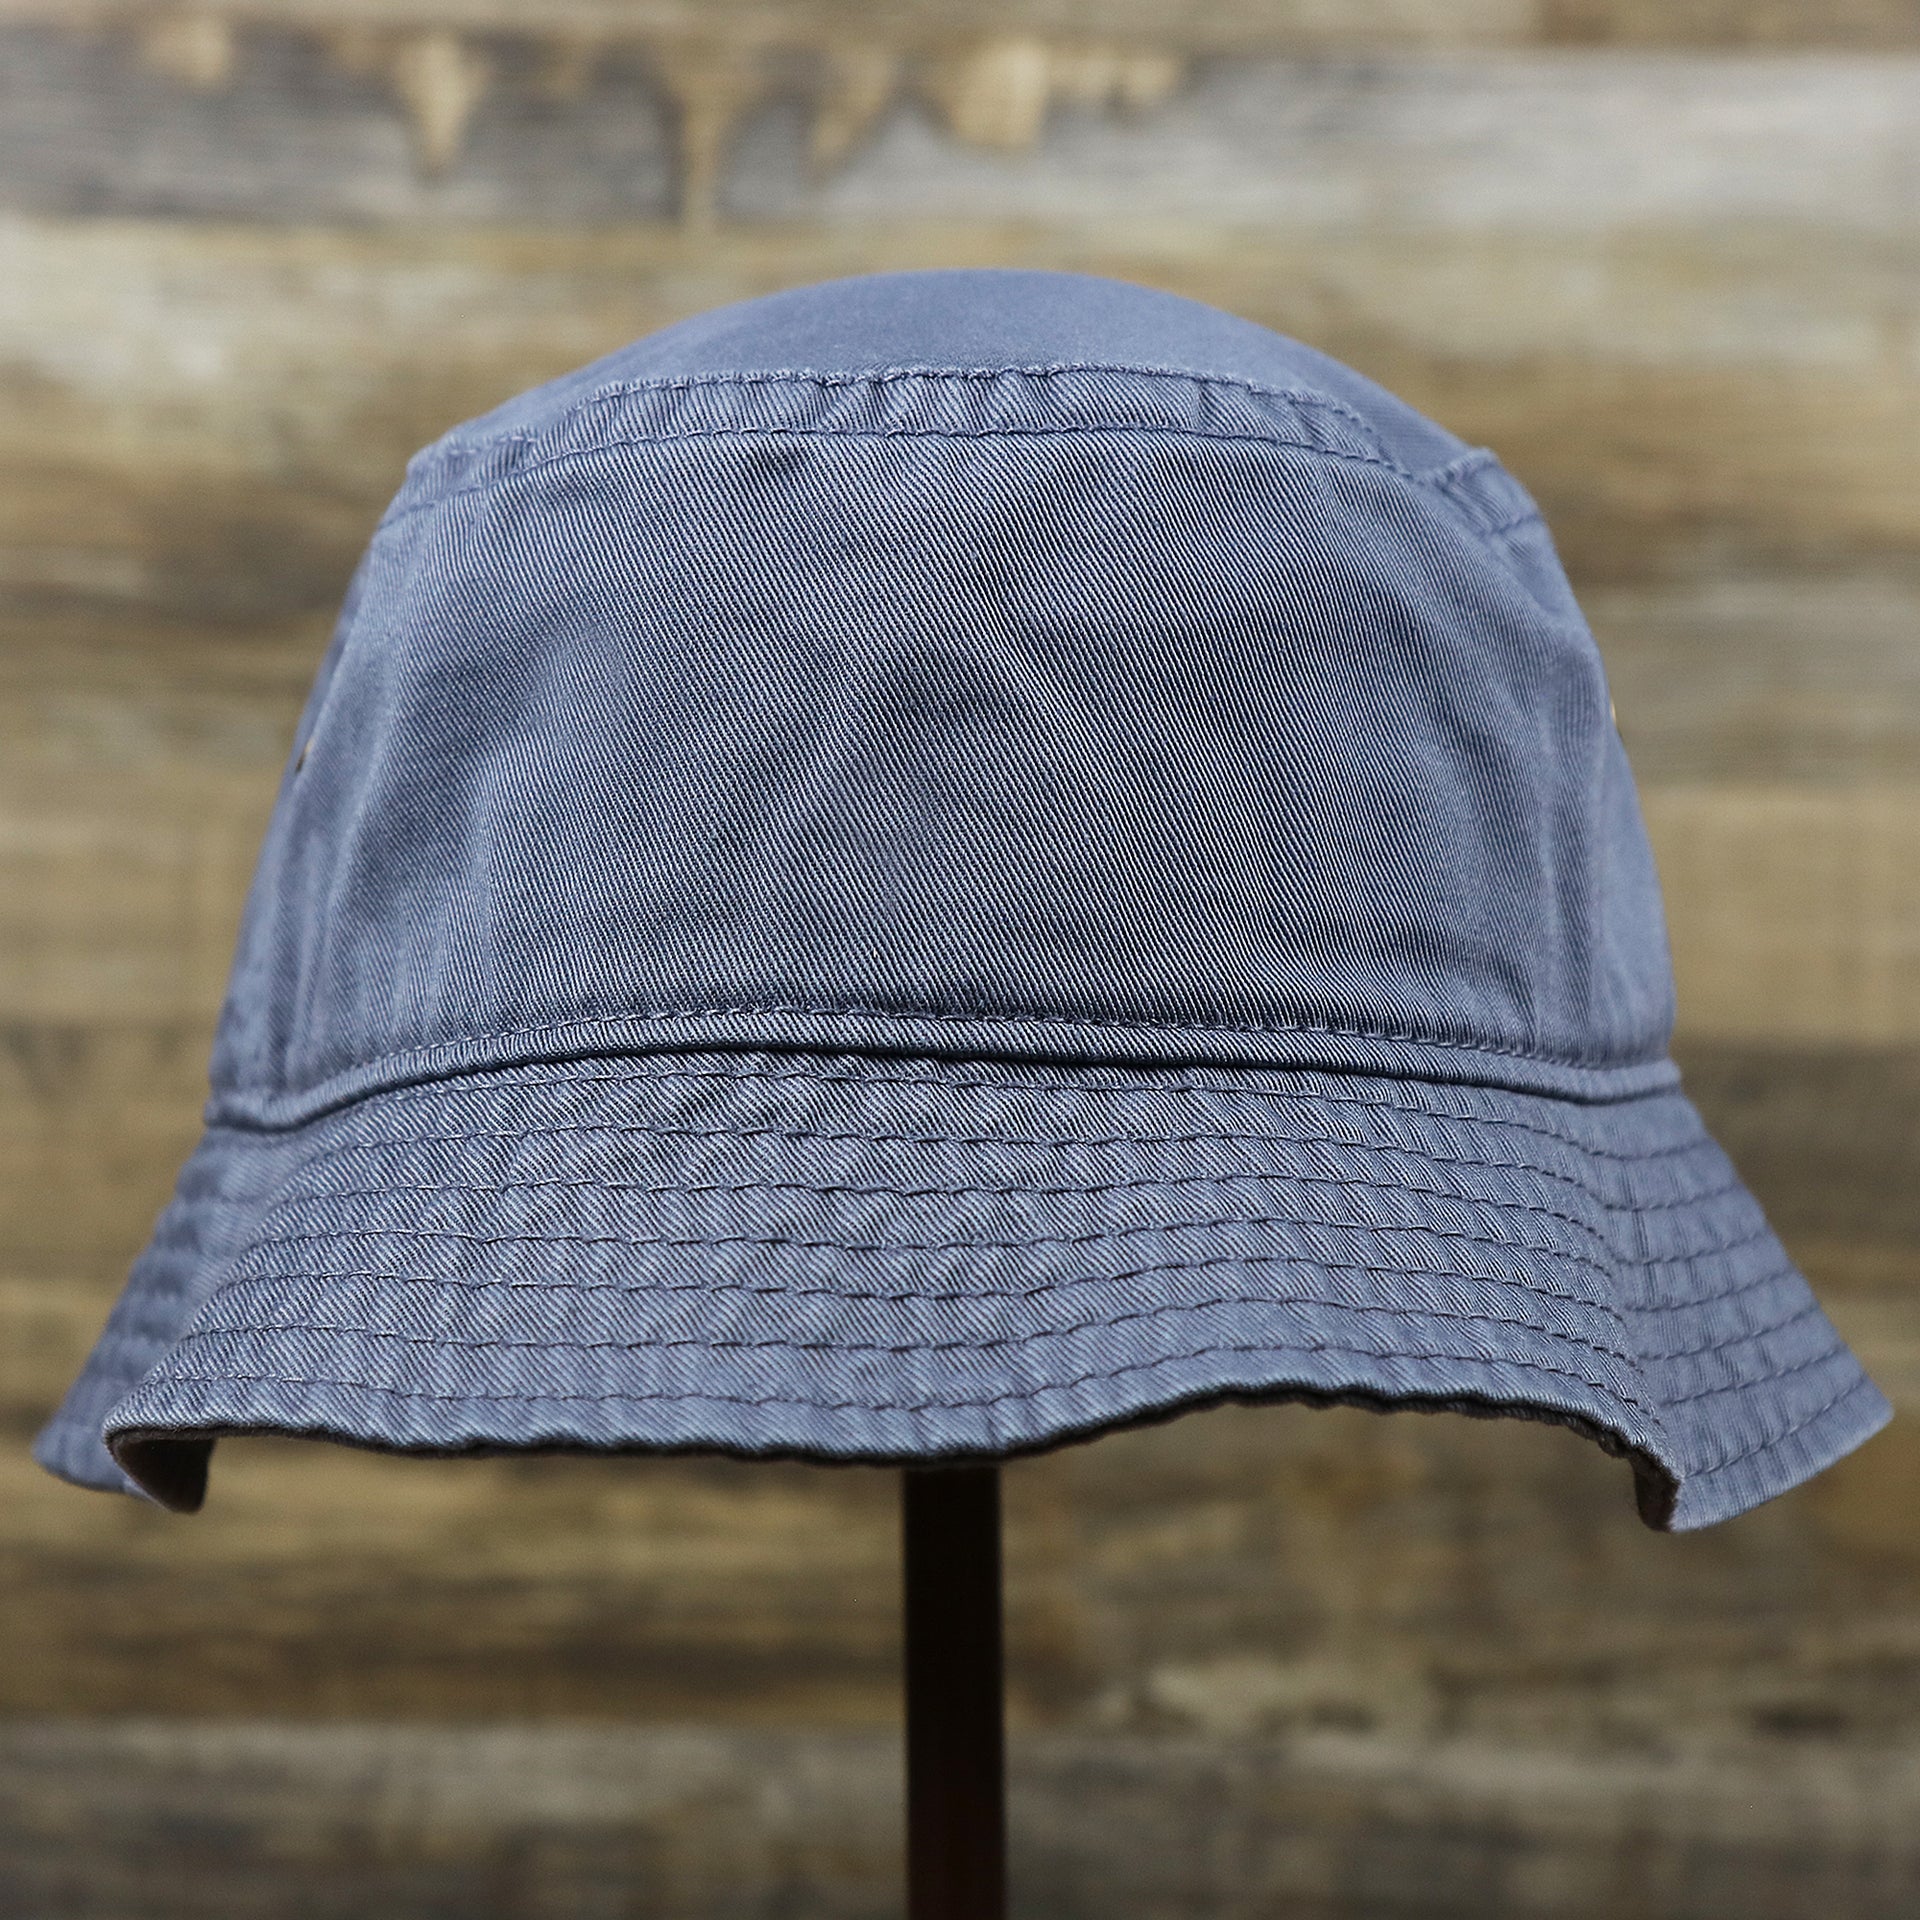 The backside of the Ocean City Anchor New Jersey Wordmark Bucket Hat | Slate Blue Bucket Hat